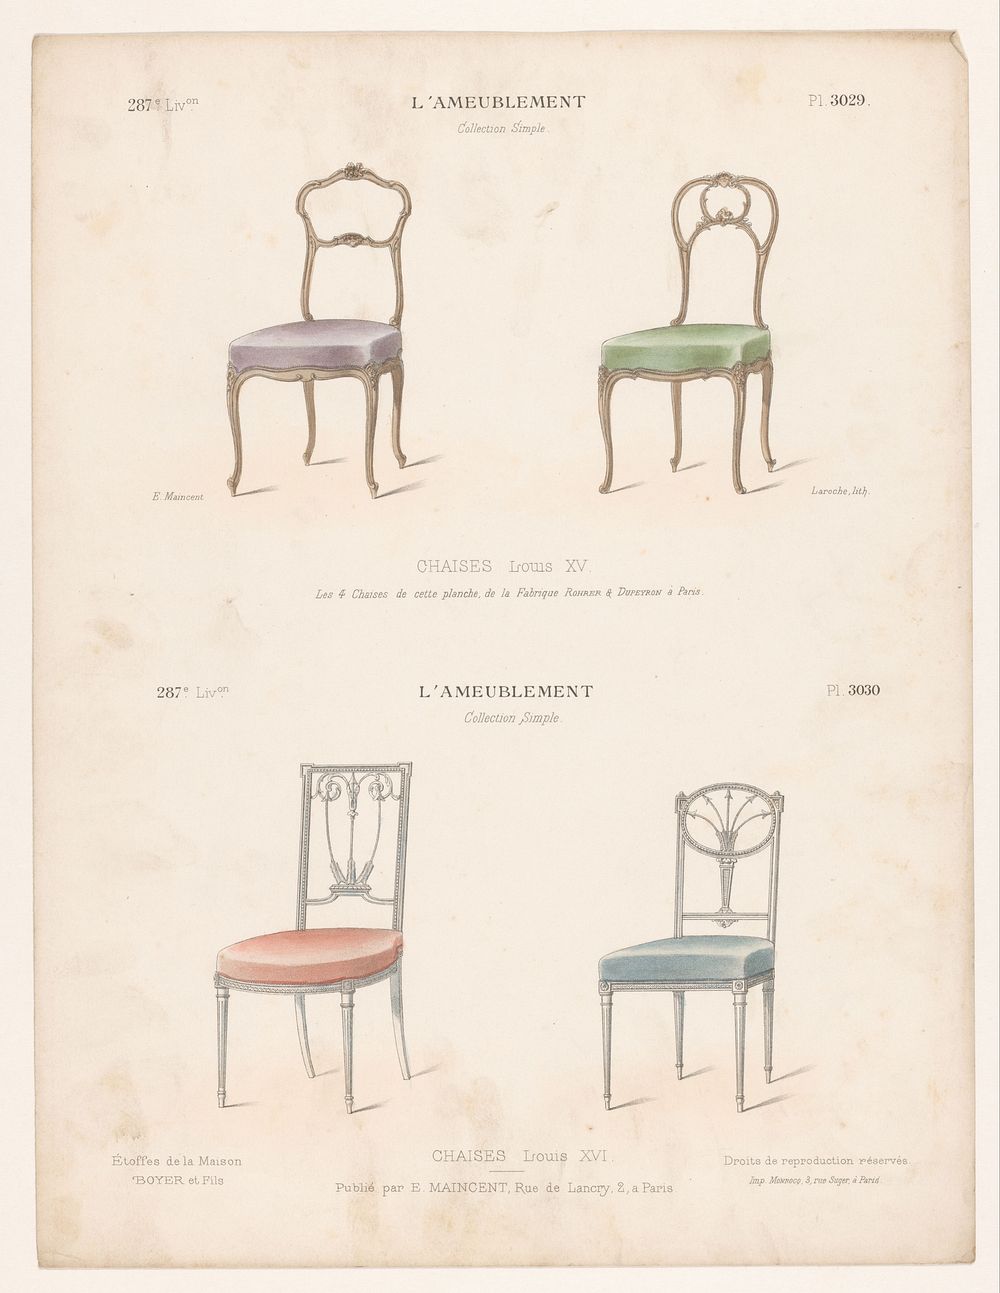 Vier stoelen (1885 - 1895) by Léon Laroche, Monrocq and Eugène Maincent